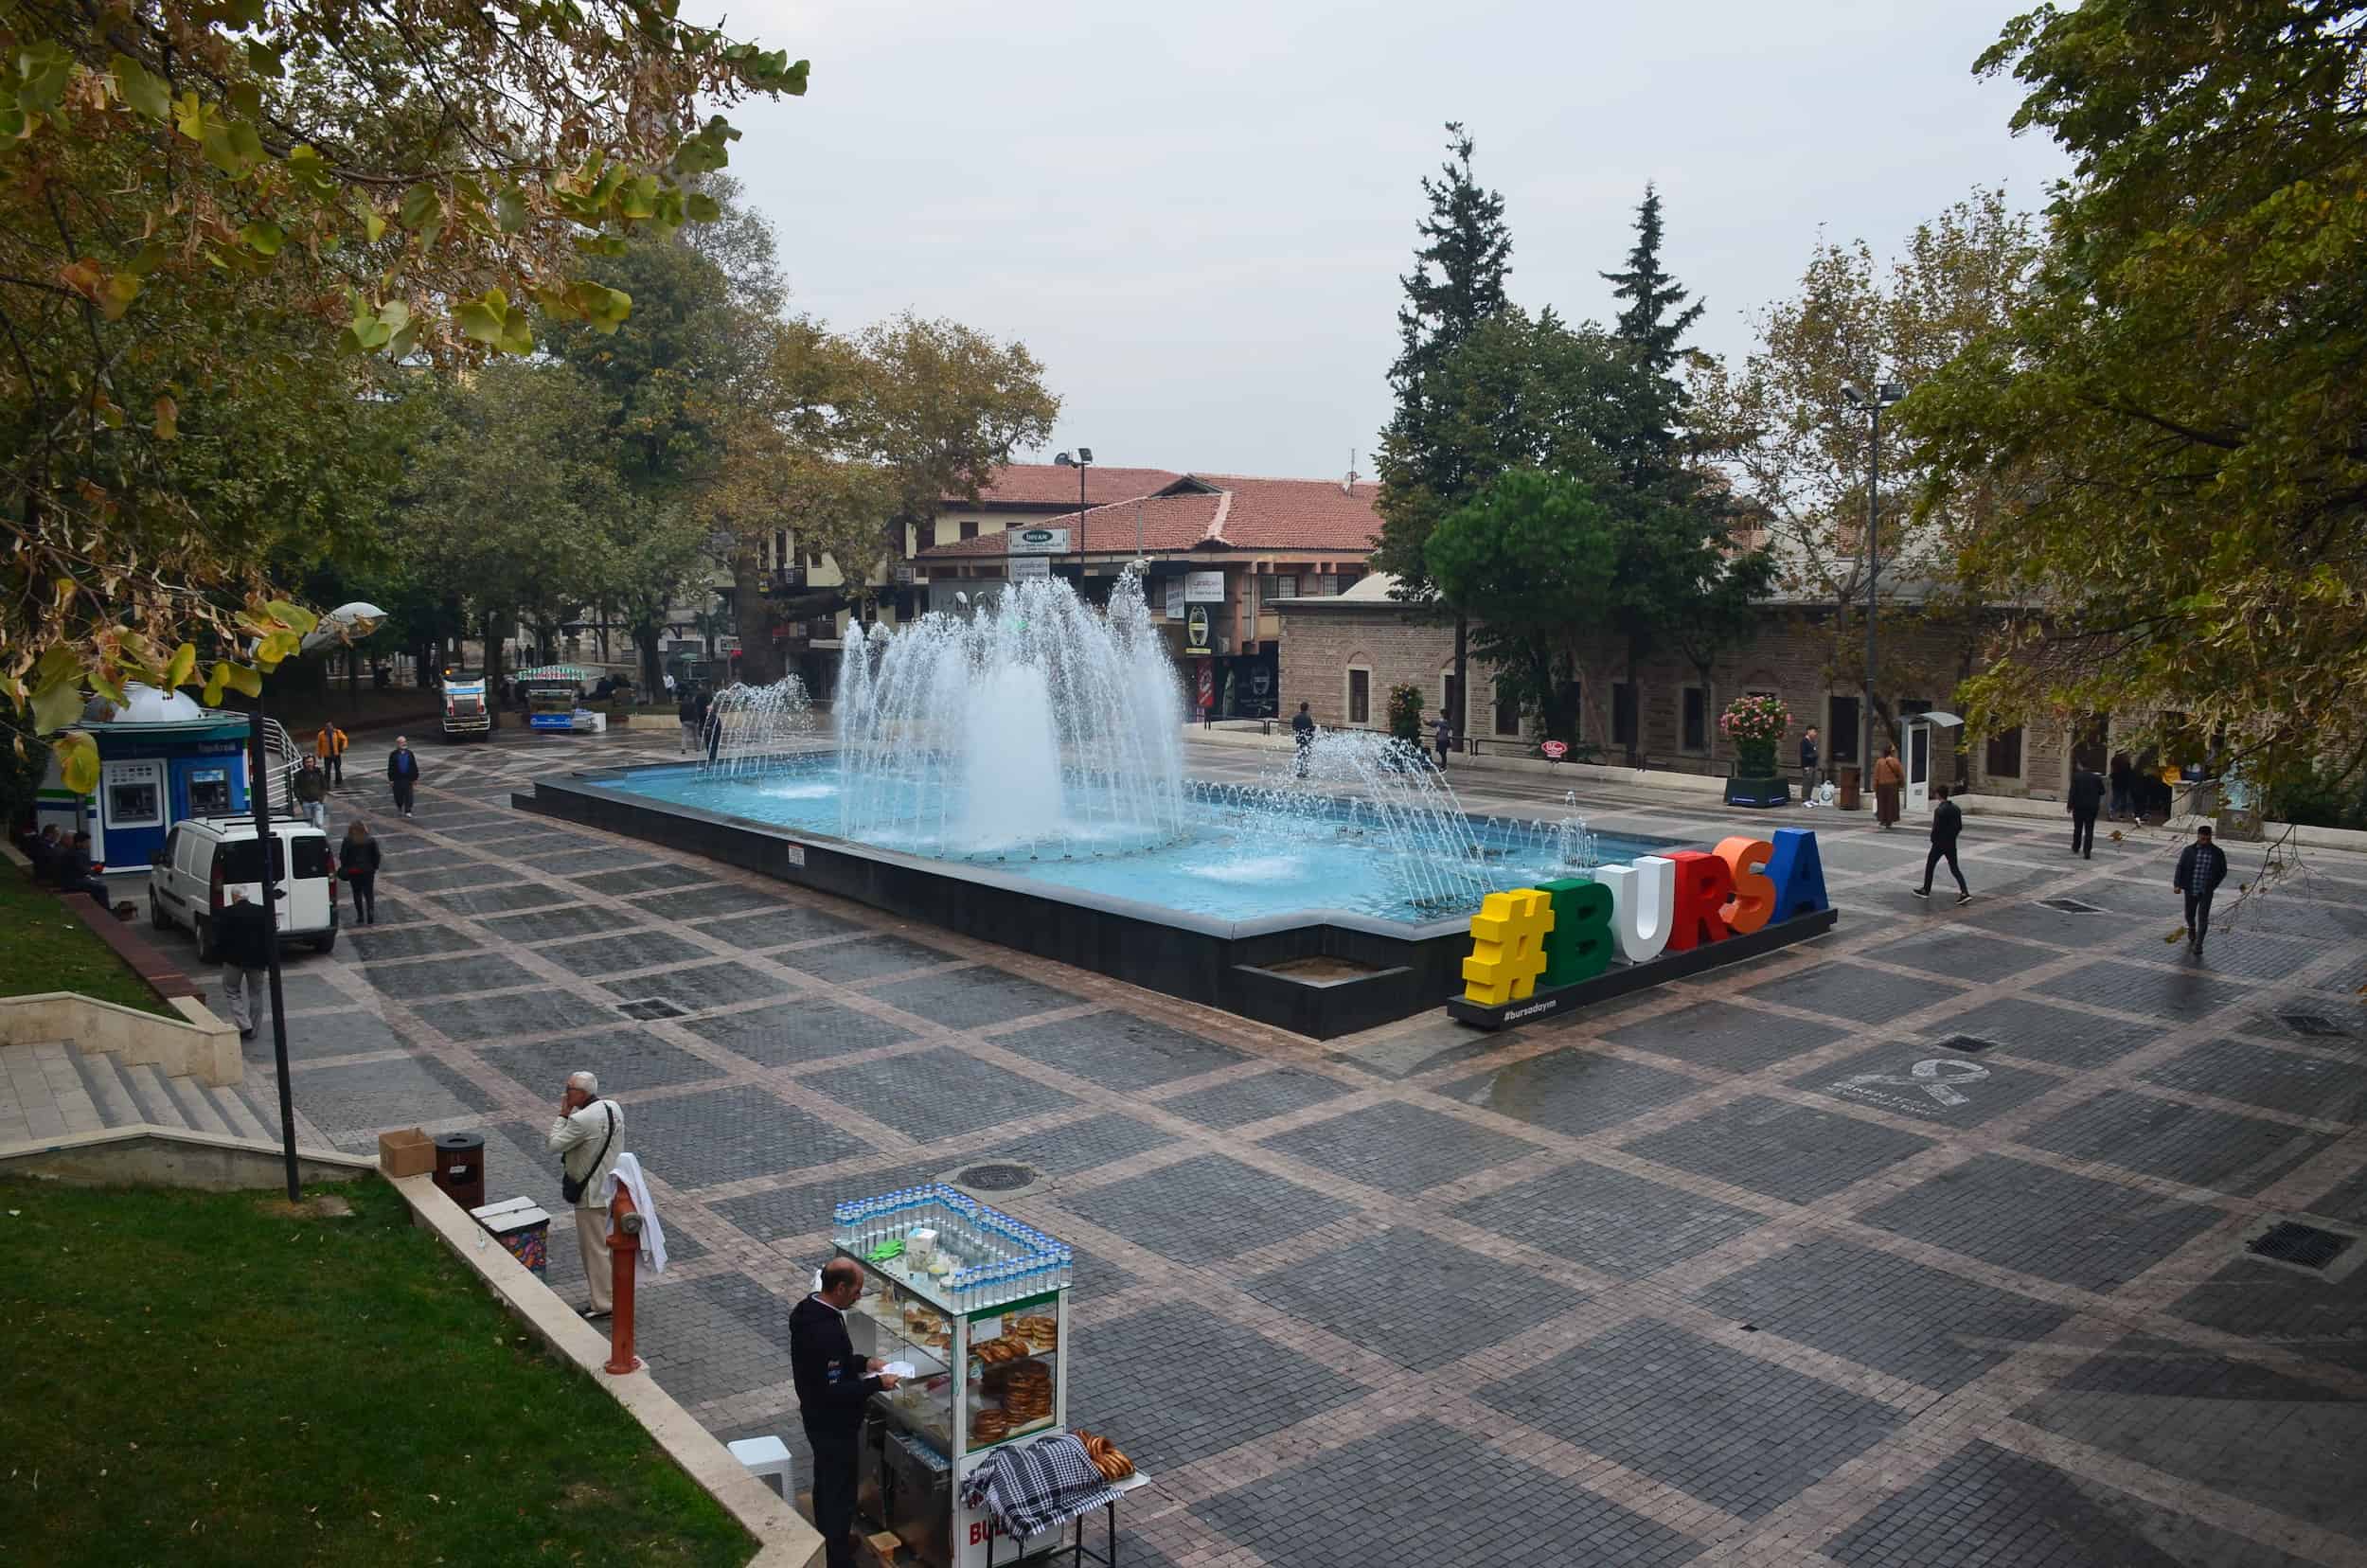 Gazi Orhan Park in Bursa, Turkey